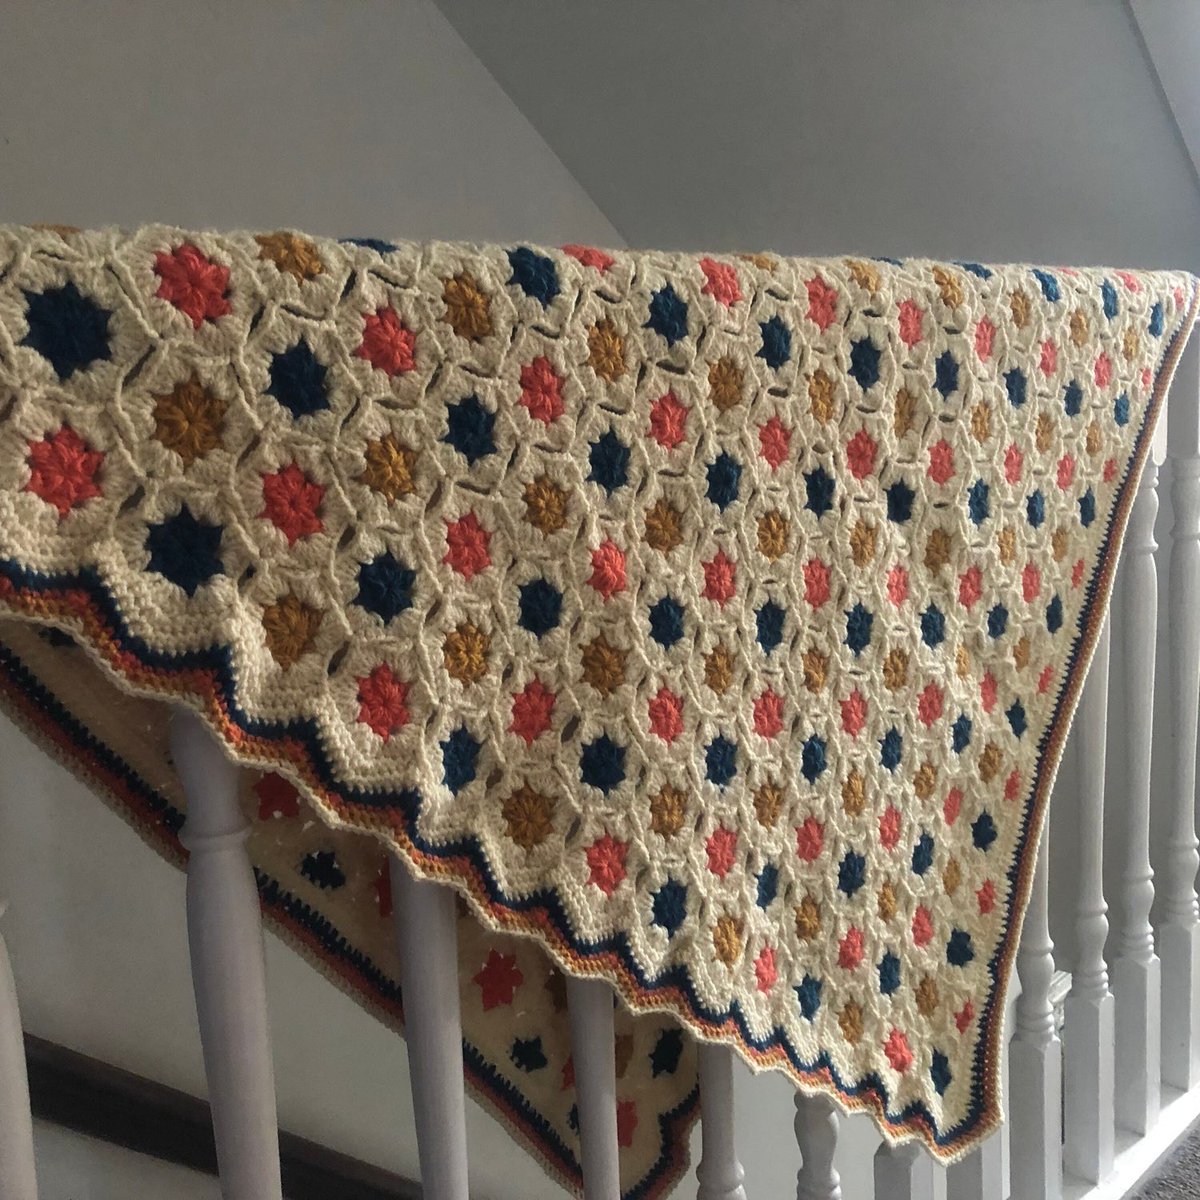 Handmade Crochet Hexagon Blanket #GrannySquare #MHHSBD #UKMakers #CraftBizParty #wip #Elevenseshour #picnic  #patchwork #countryfarmhouse #crochetgift #homewear #hexagons #yarn #handmadeblanket etsy.me/3VvaxEE